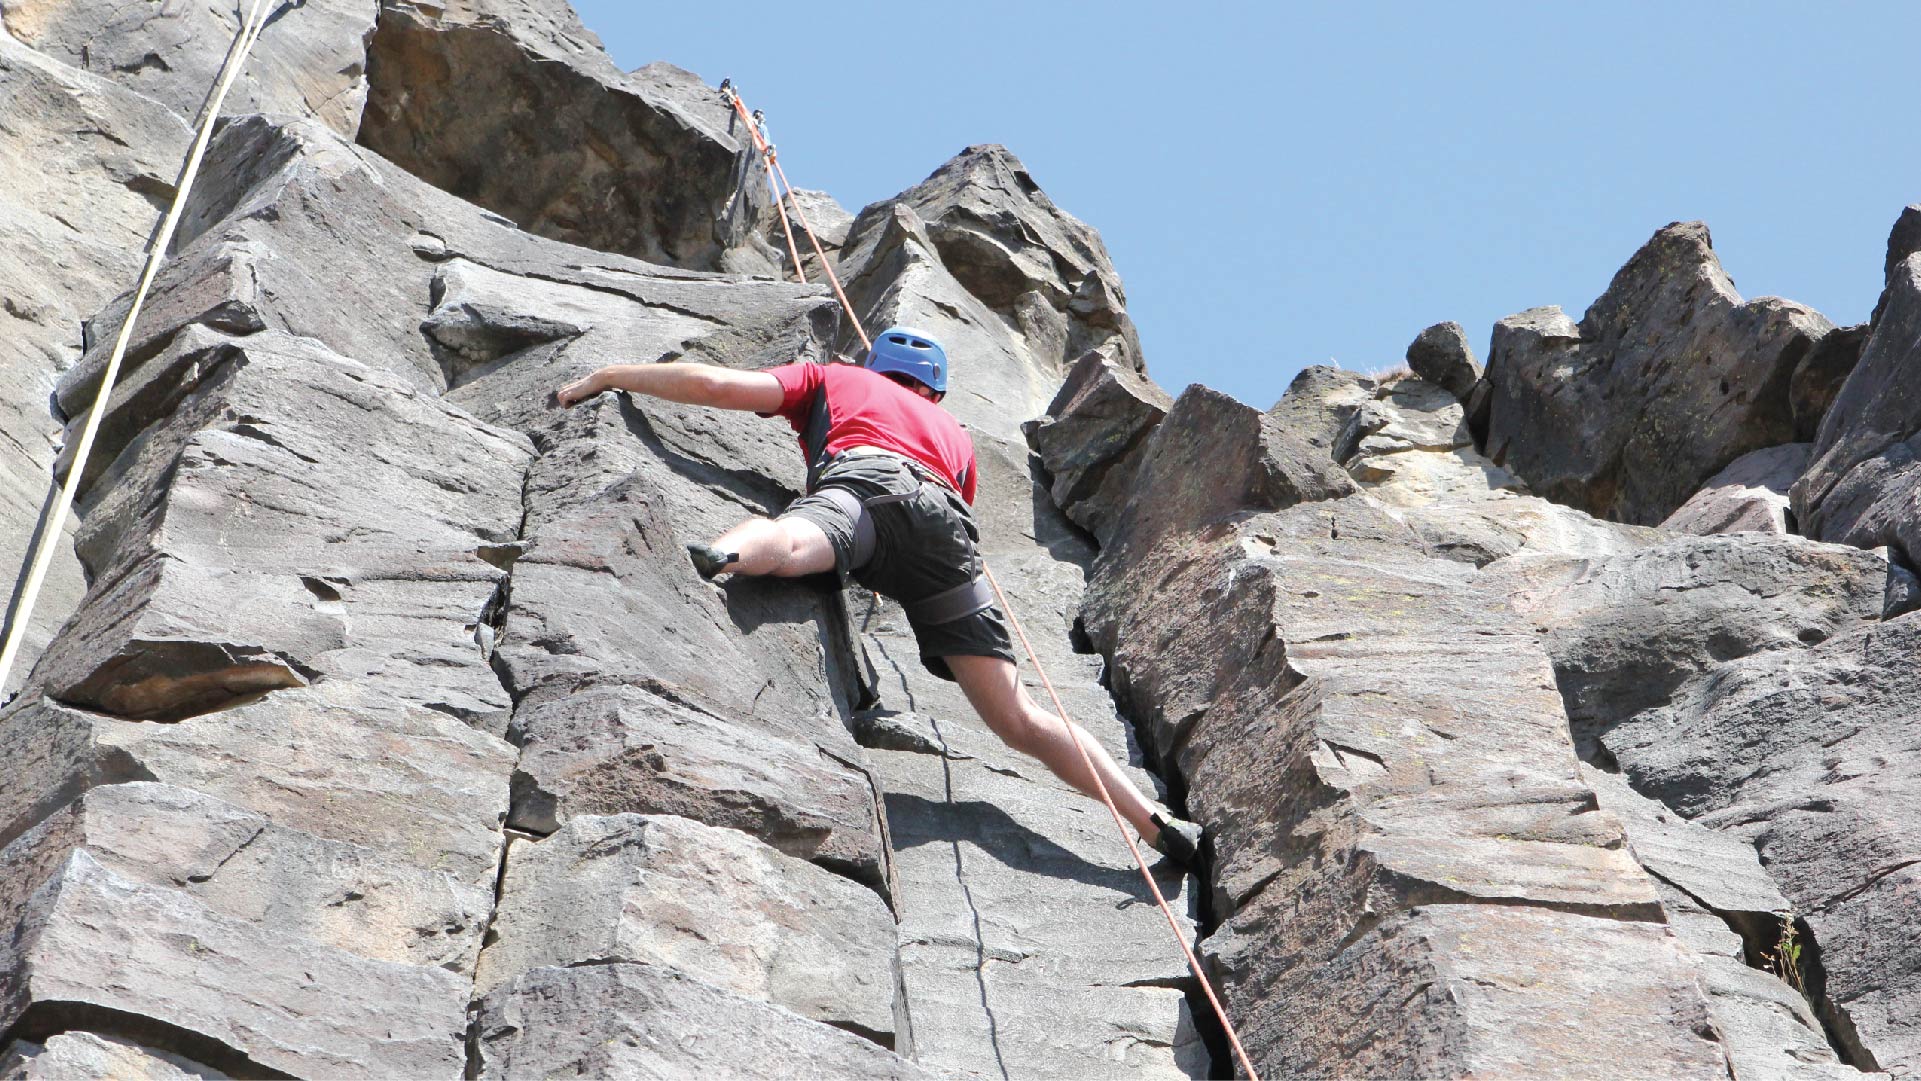 Trad Climbing – Anchors & Lead Climbing